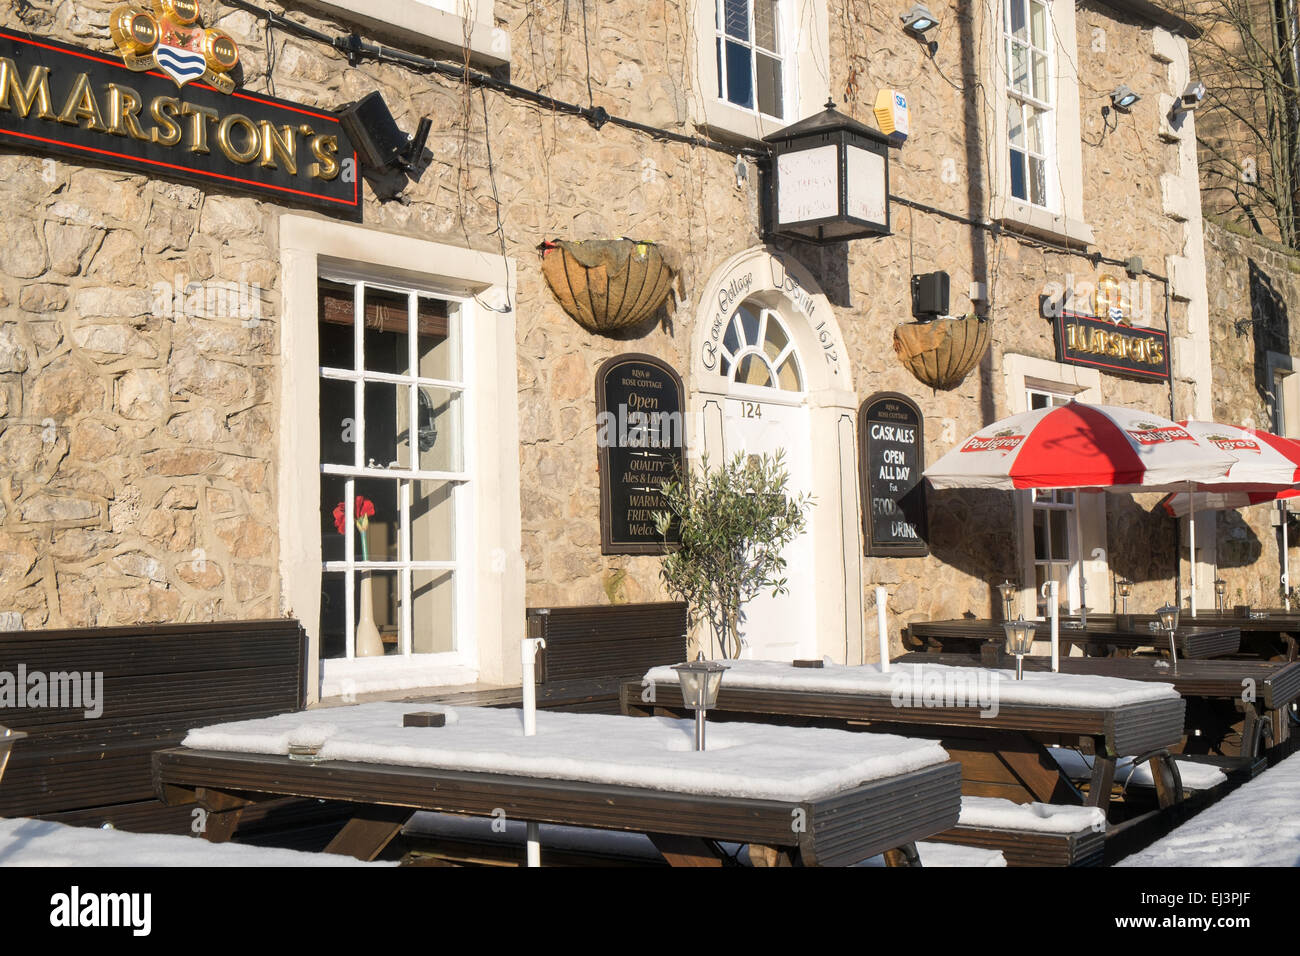 Traditional english pub selling marstons beer in Matlock Bath,Derbyshire,England,United Kingdom Stock Photo